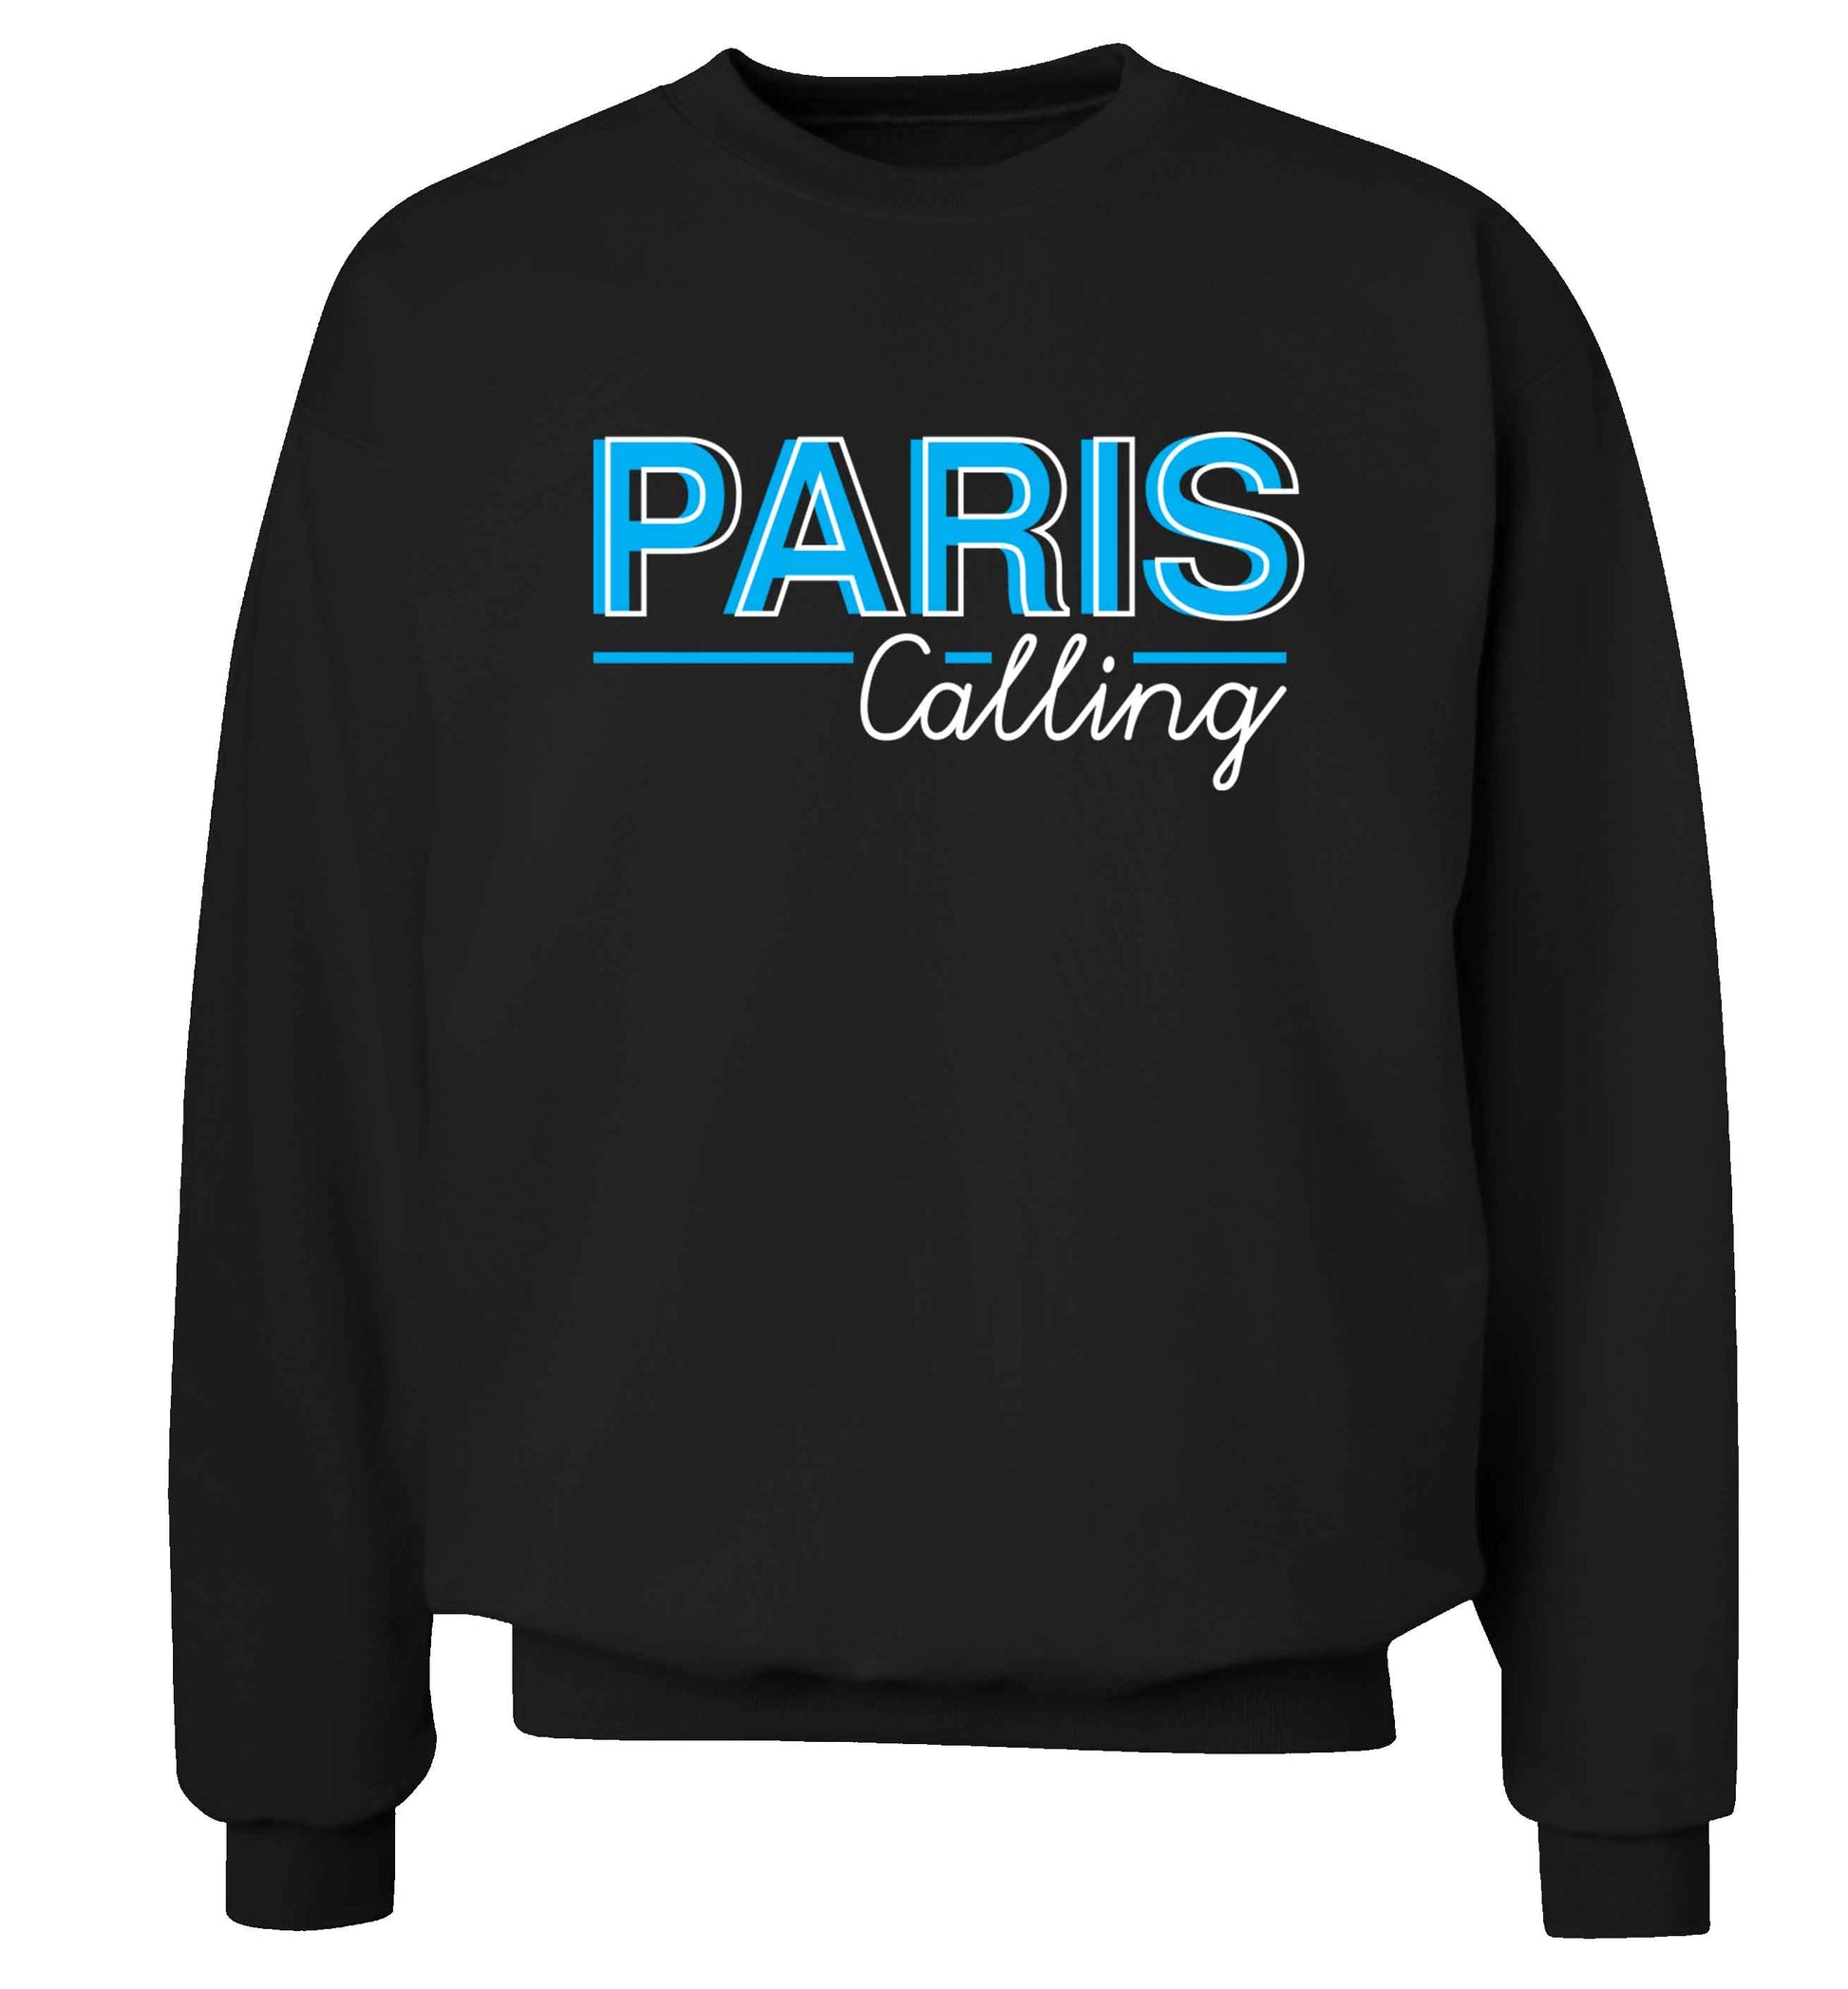 Paris calling Adult's unisex black Sweater 2XL